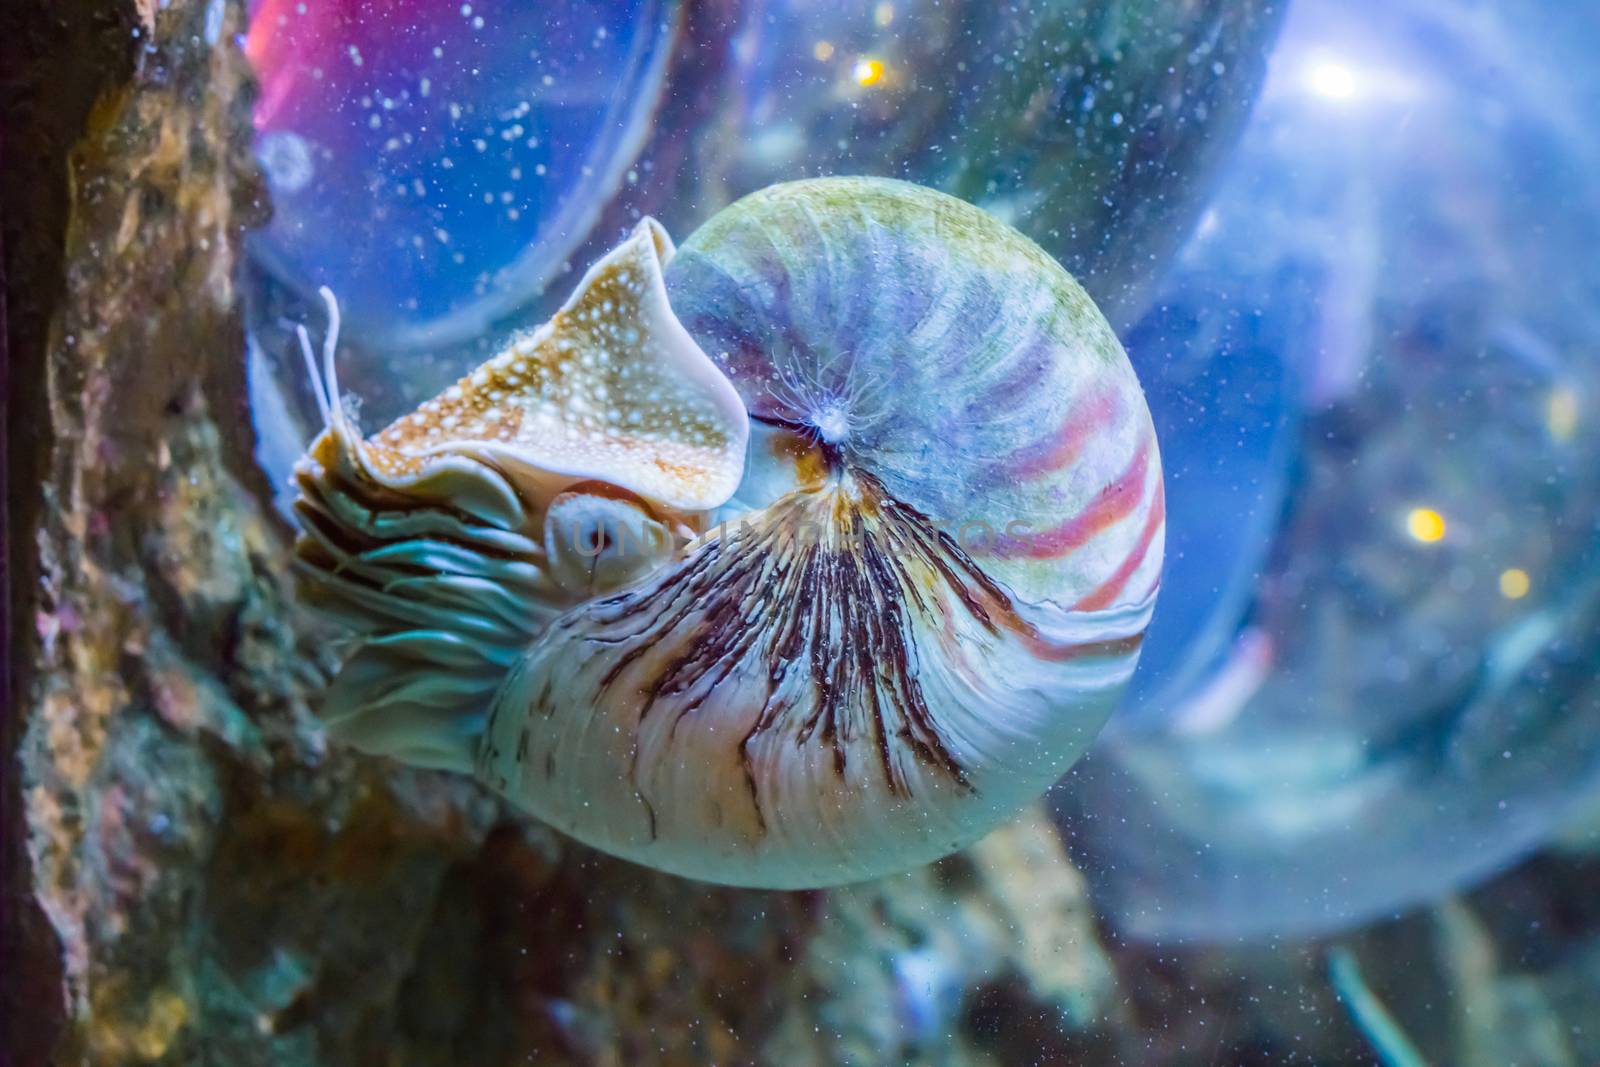 beautiful nautilus squid animal marine life portrait of a rare exotic living shell fossil by charlottebleijenberg